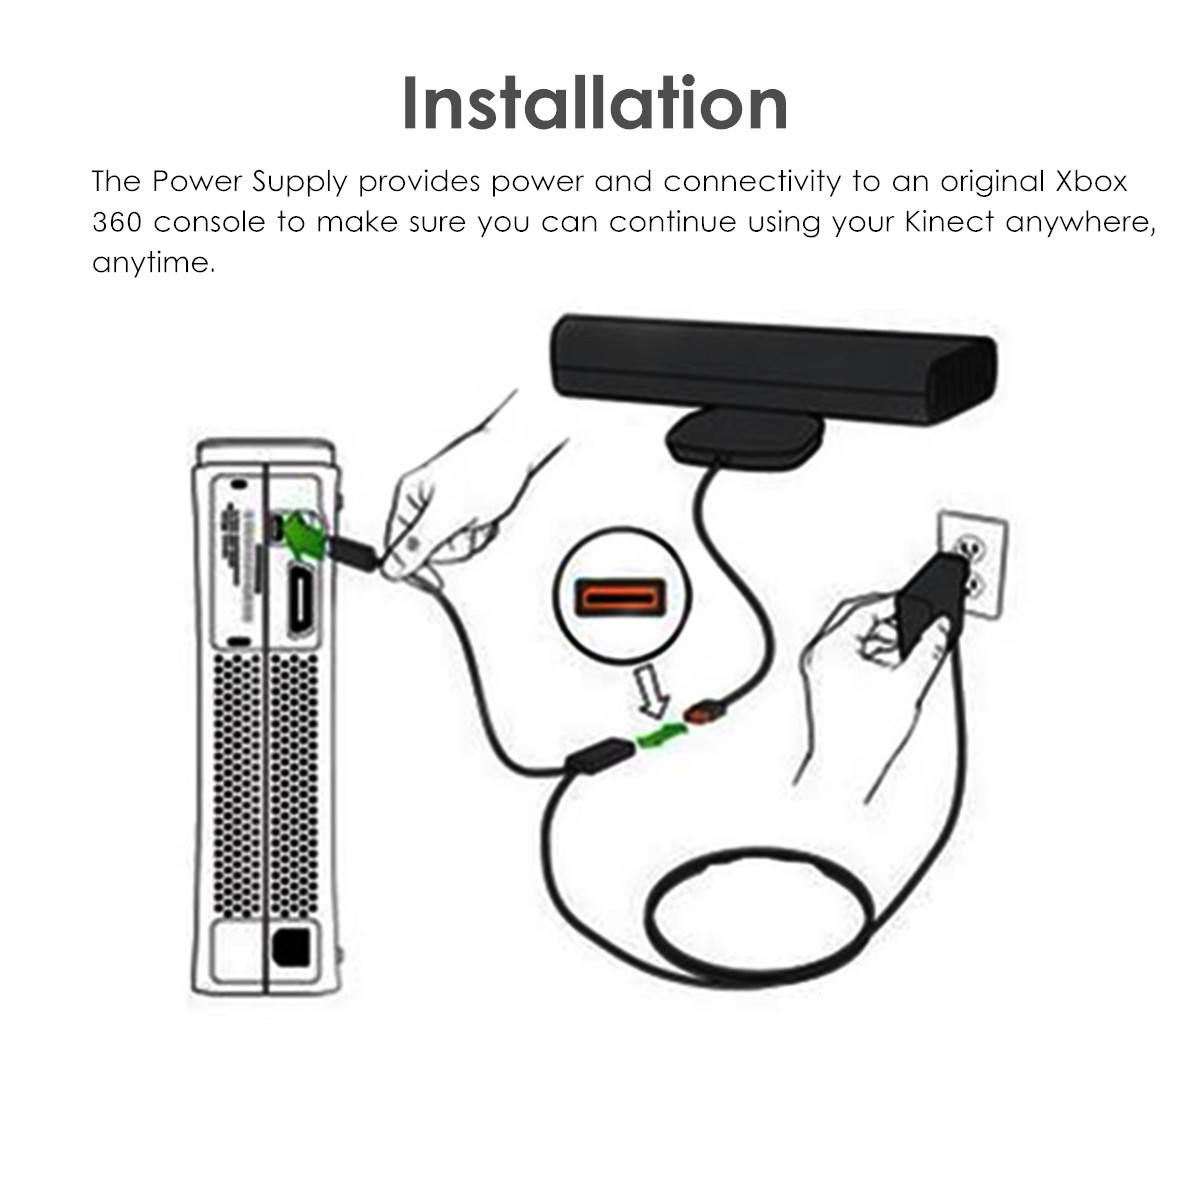 23m-USB-AC-Adapter-Power-Supply-Cable-for-Xbox-360-Kinect-Sensor-EUUS-Plug-1047248